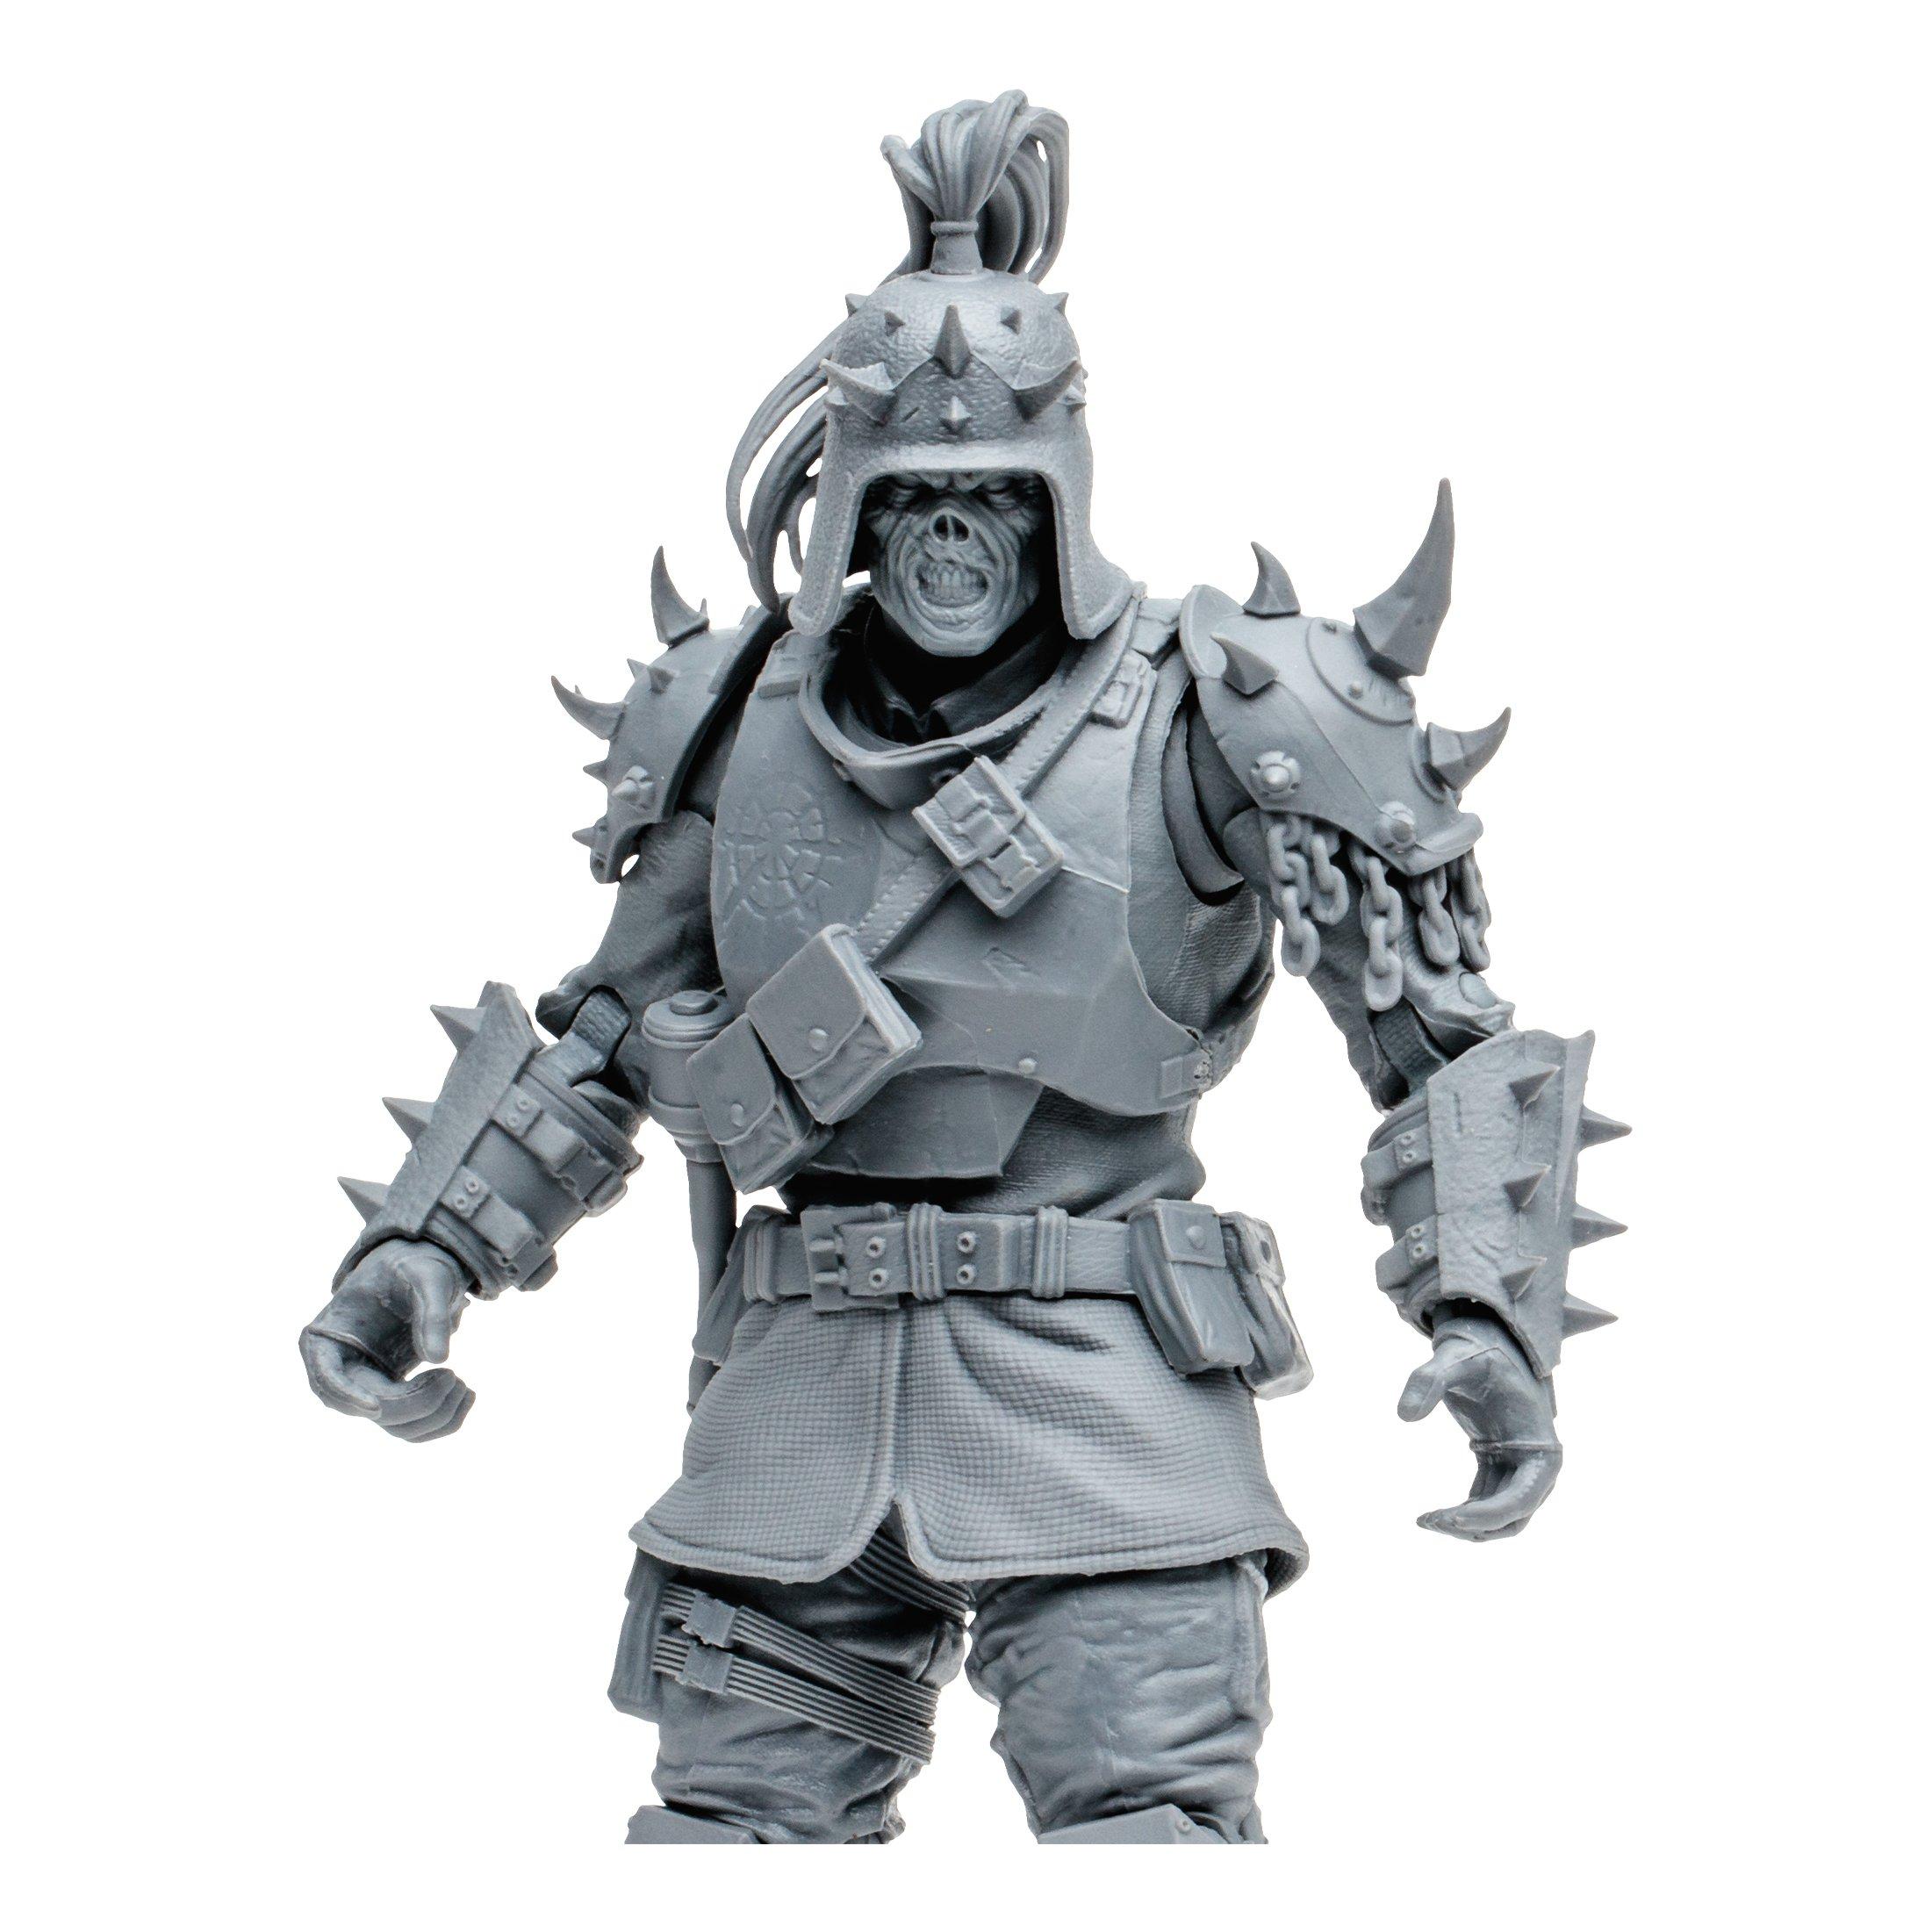 McFarlane Toys Warhammer 40,000 Darktide Traitor Guard Artist Proof 7-in Action Figure